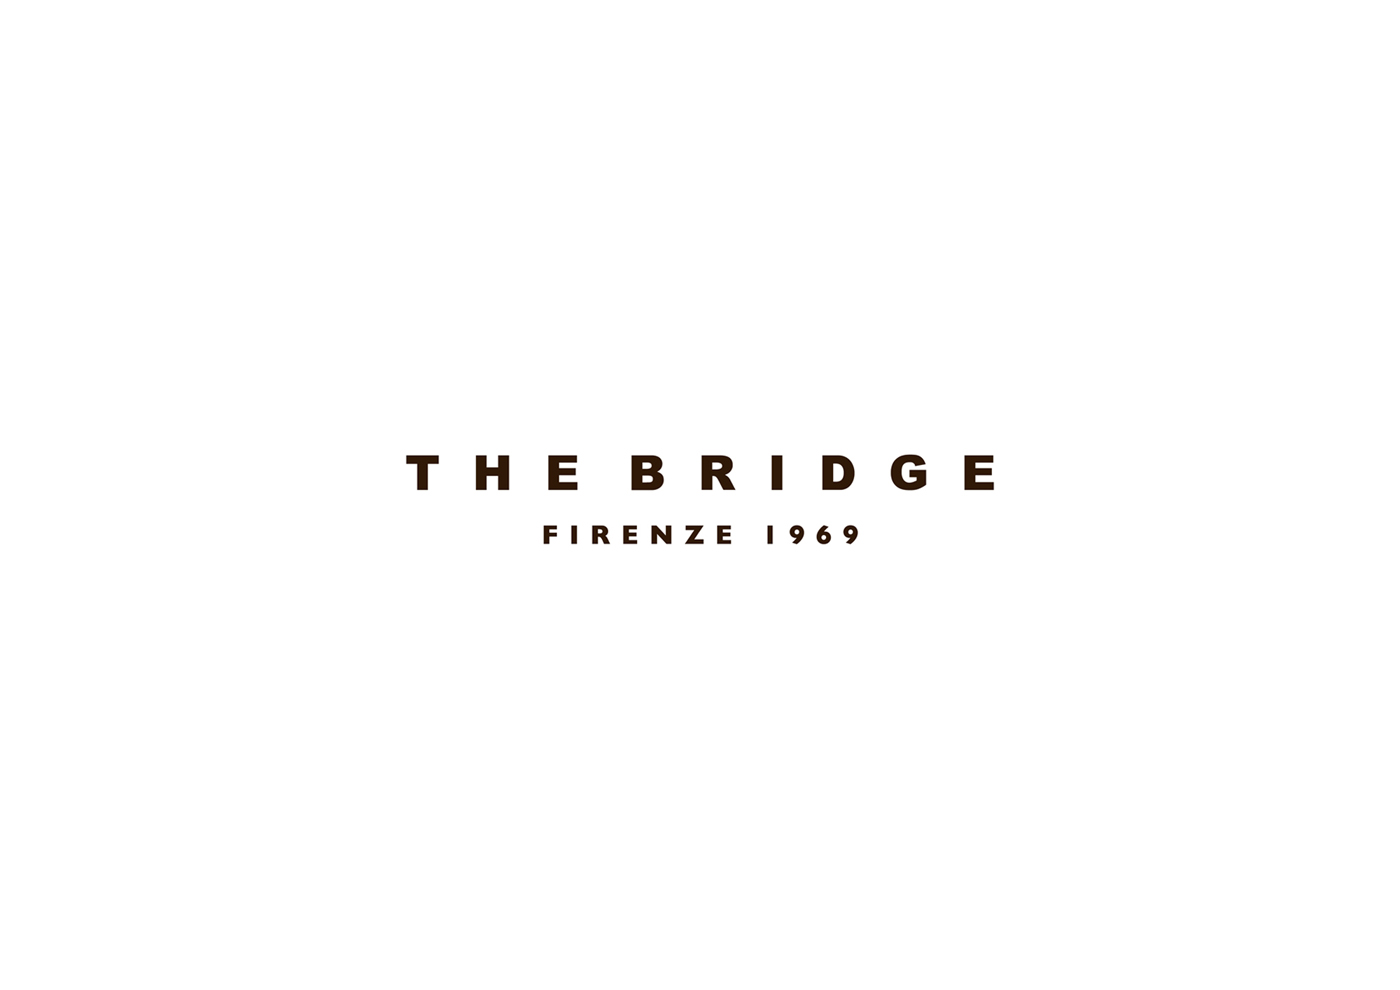 Brand Identity: THE BRIDGE